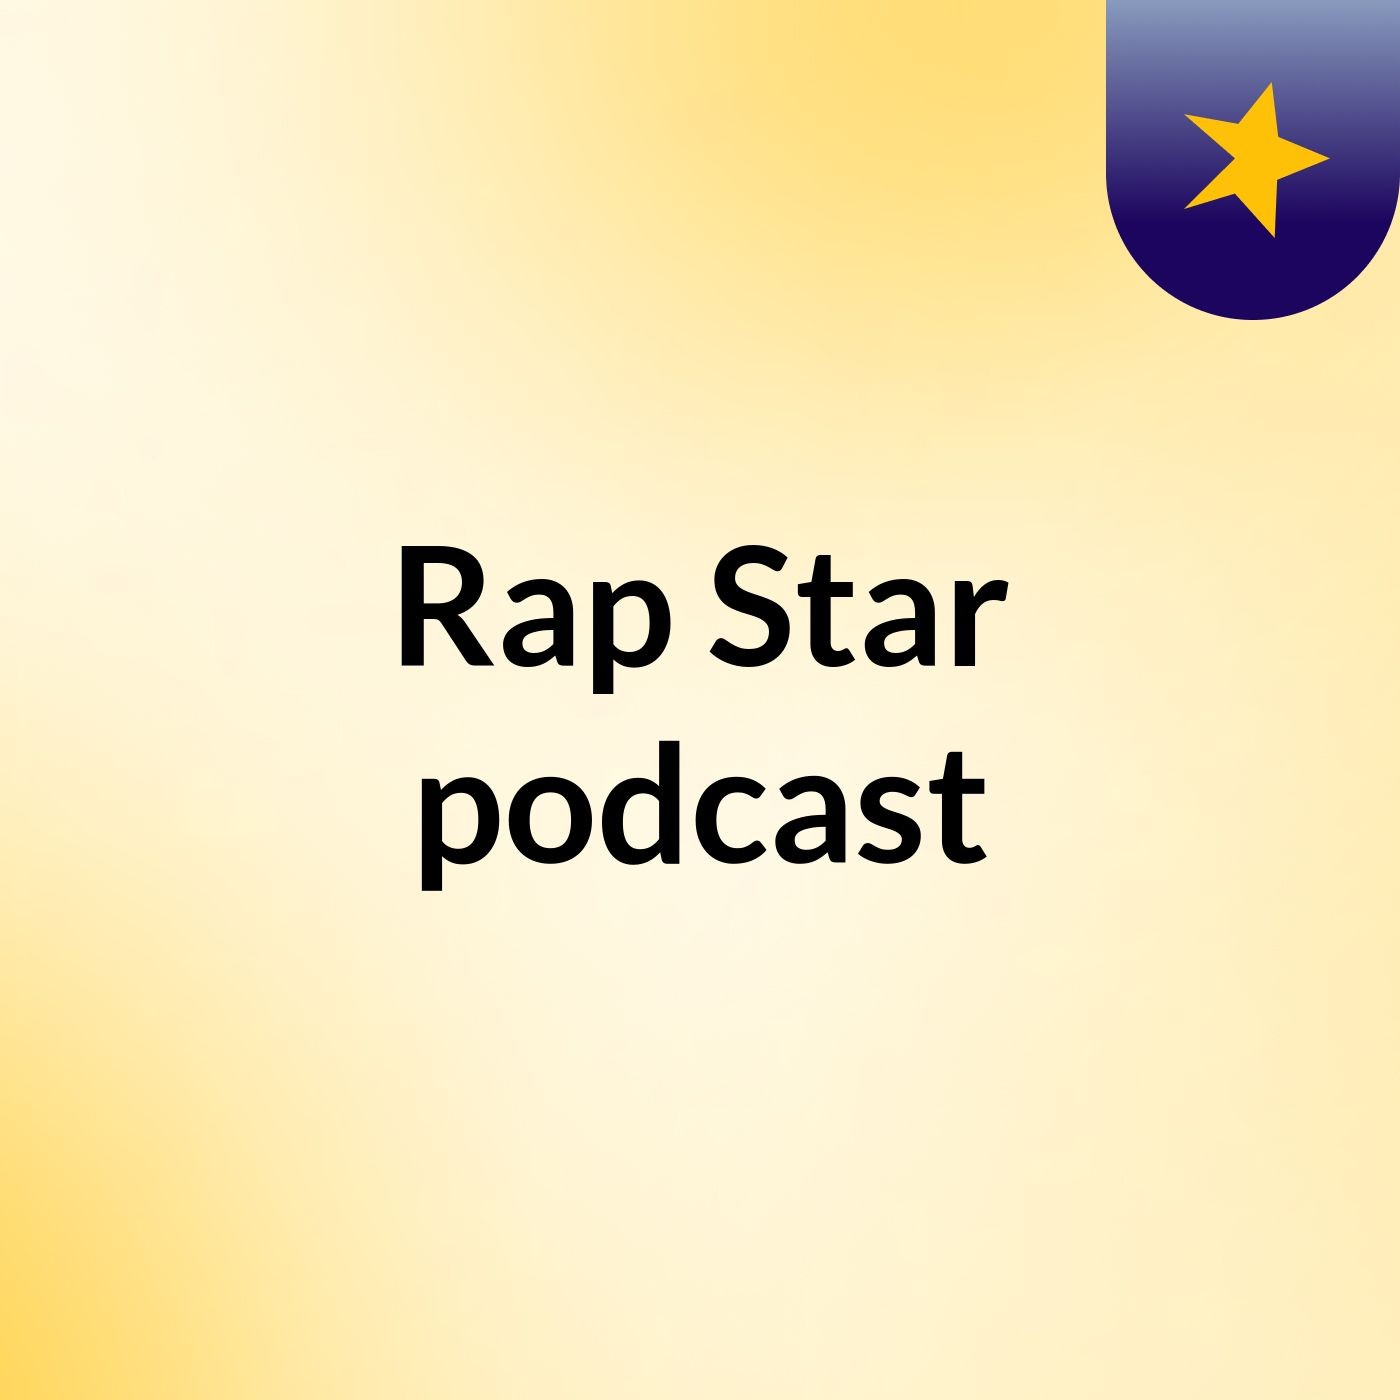 Rap Star podcast